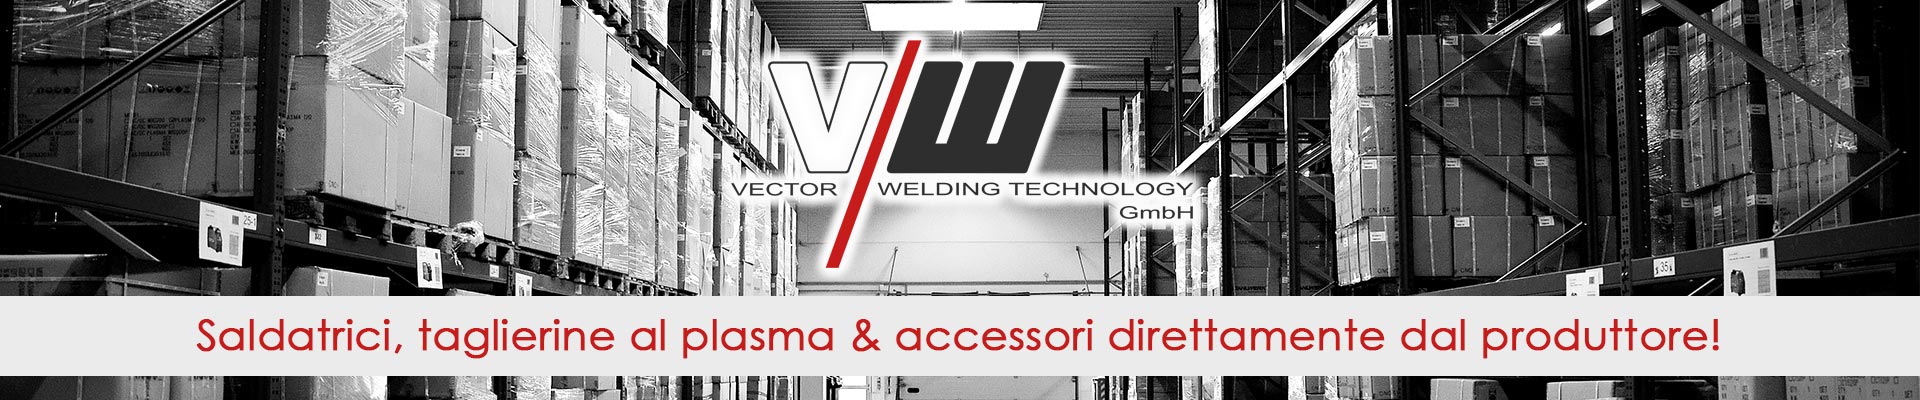 magazzino merci vector welding